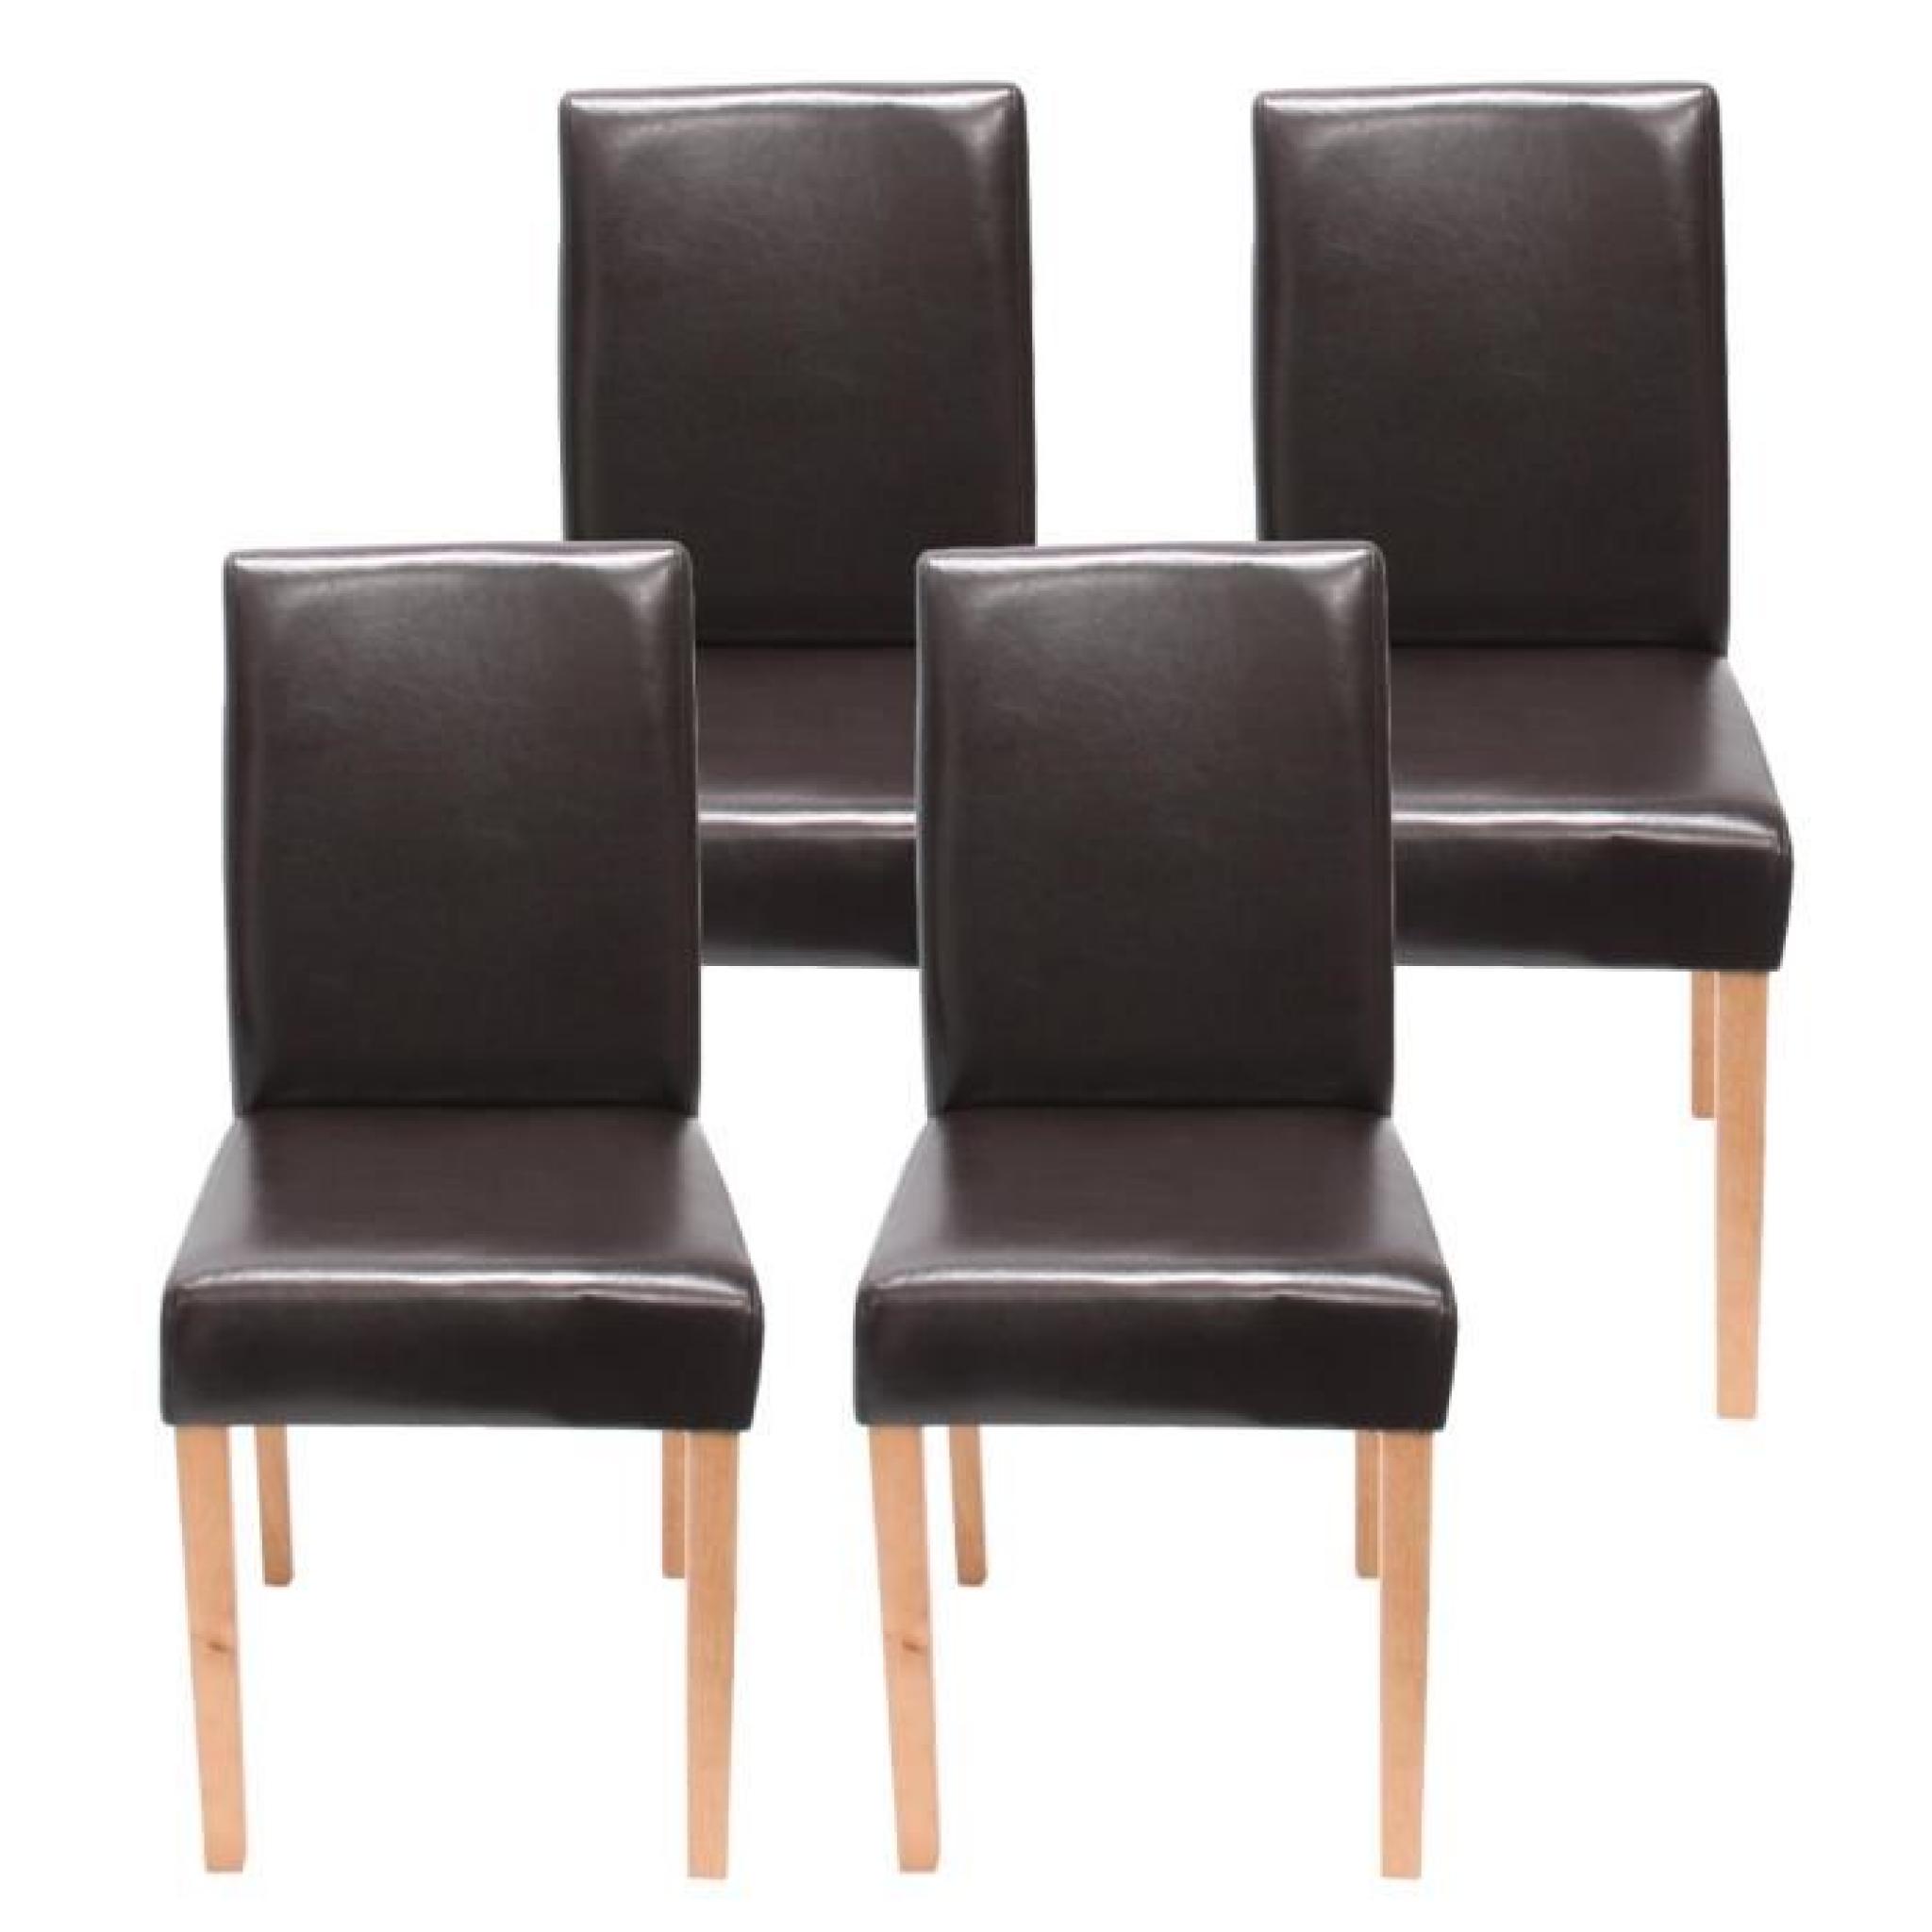  4 chaises Design moderne ; Similicuir Brun